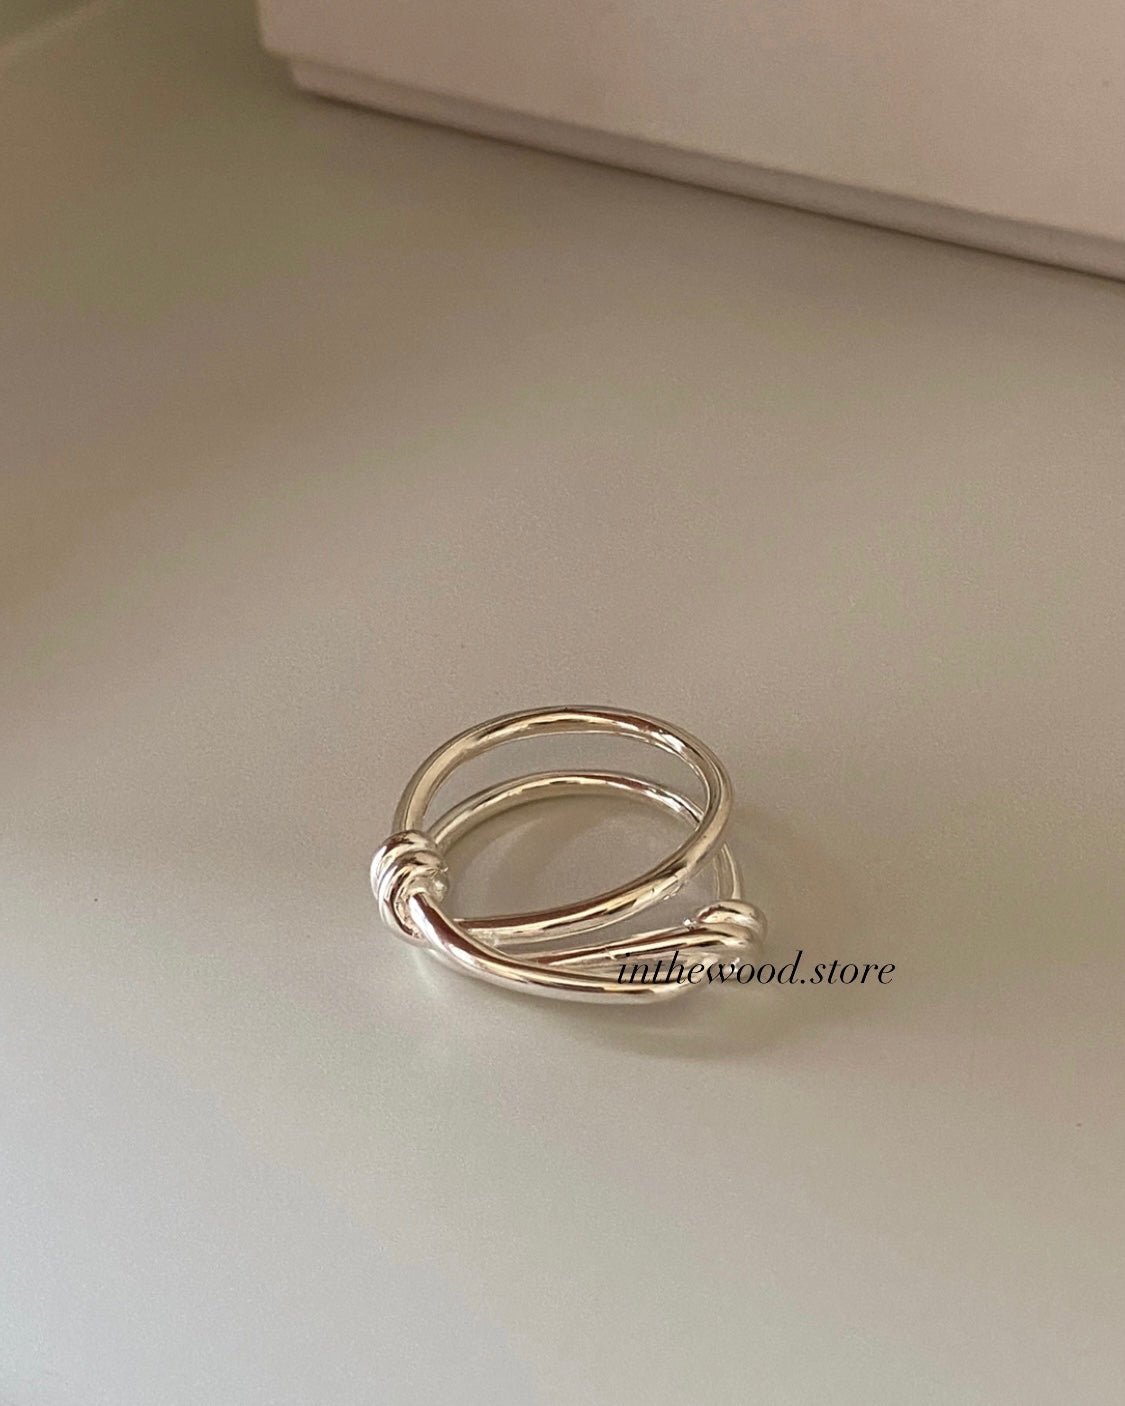 [925silver] Taylor Ring